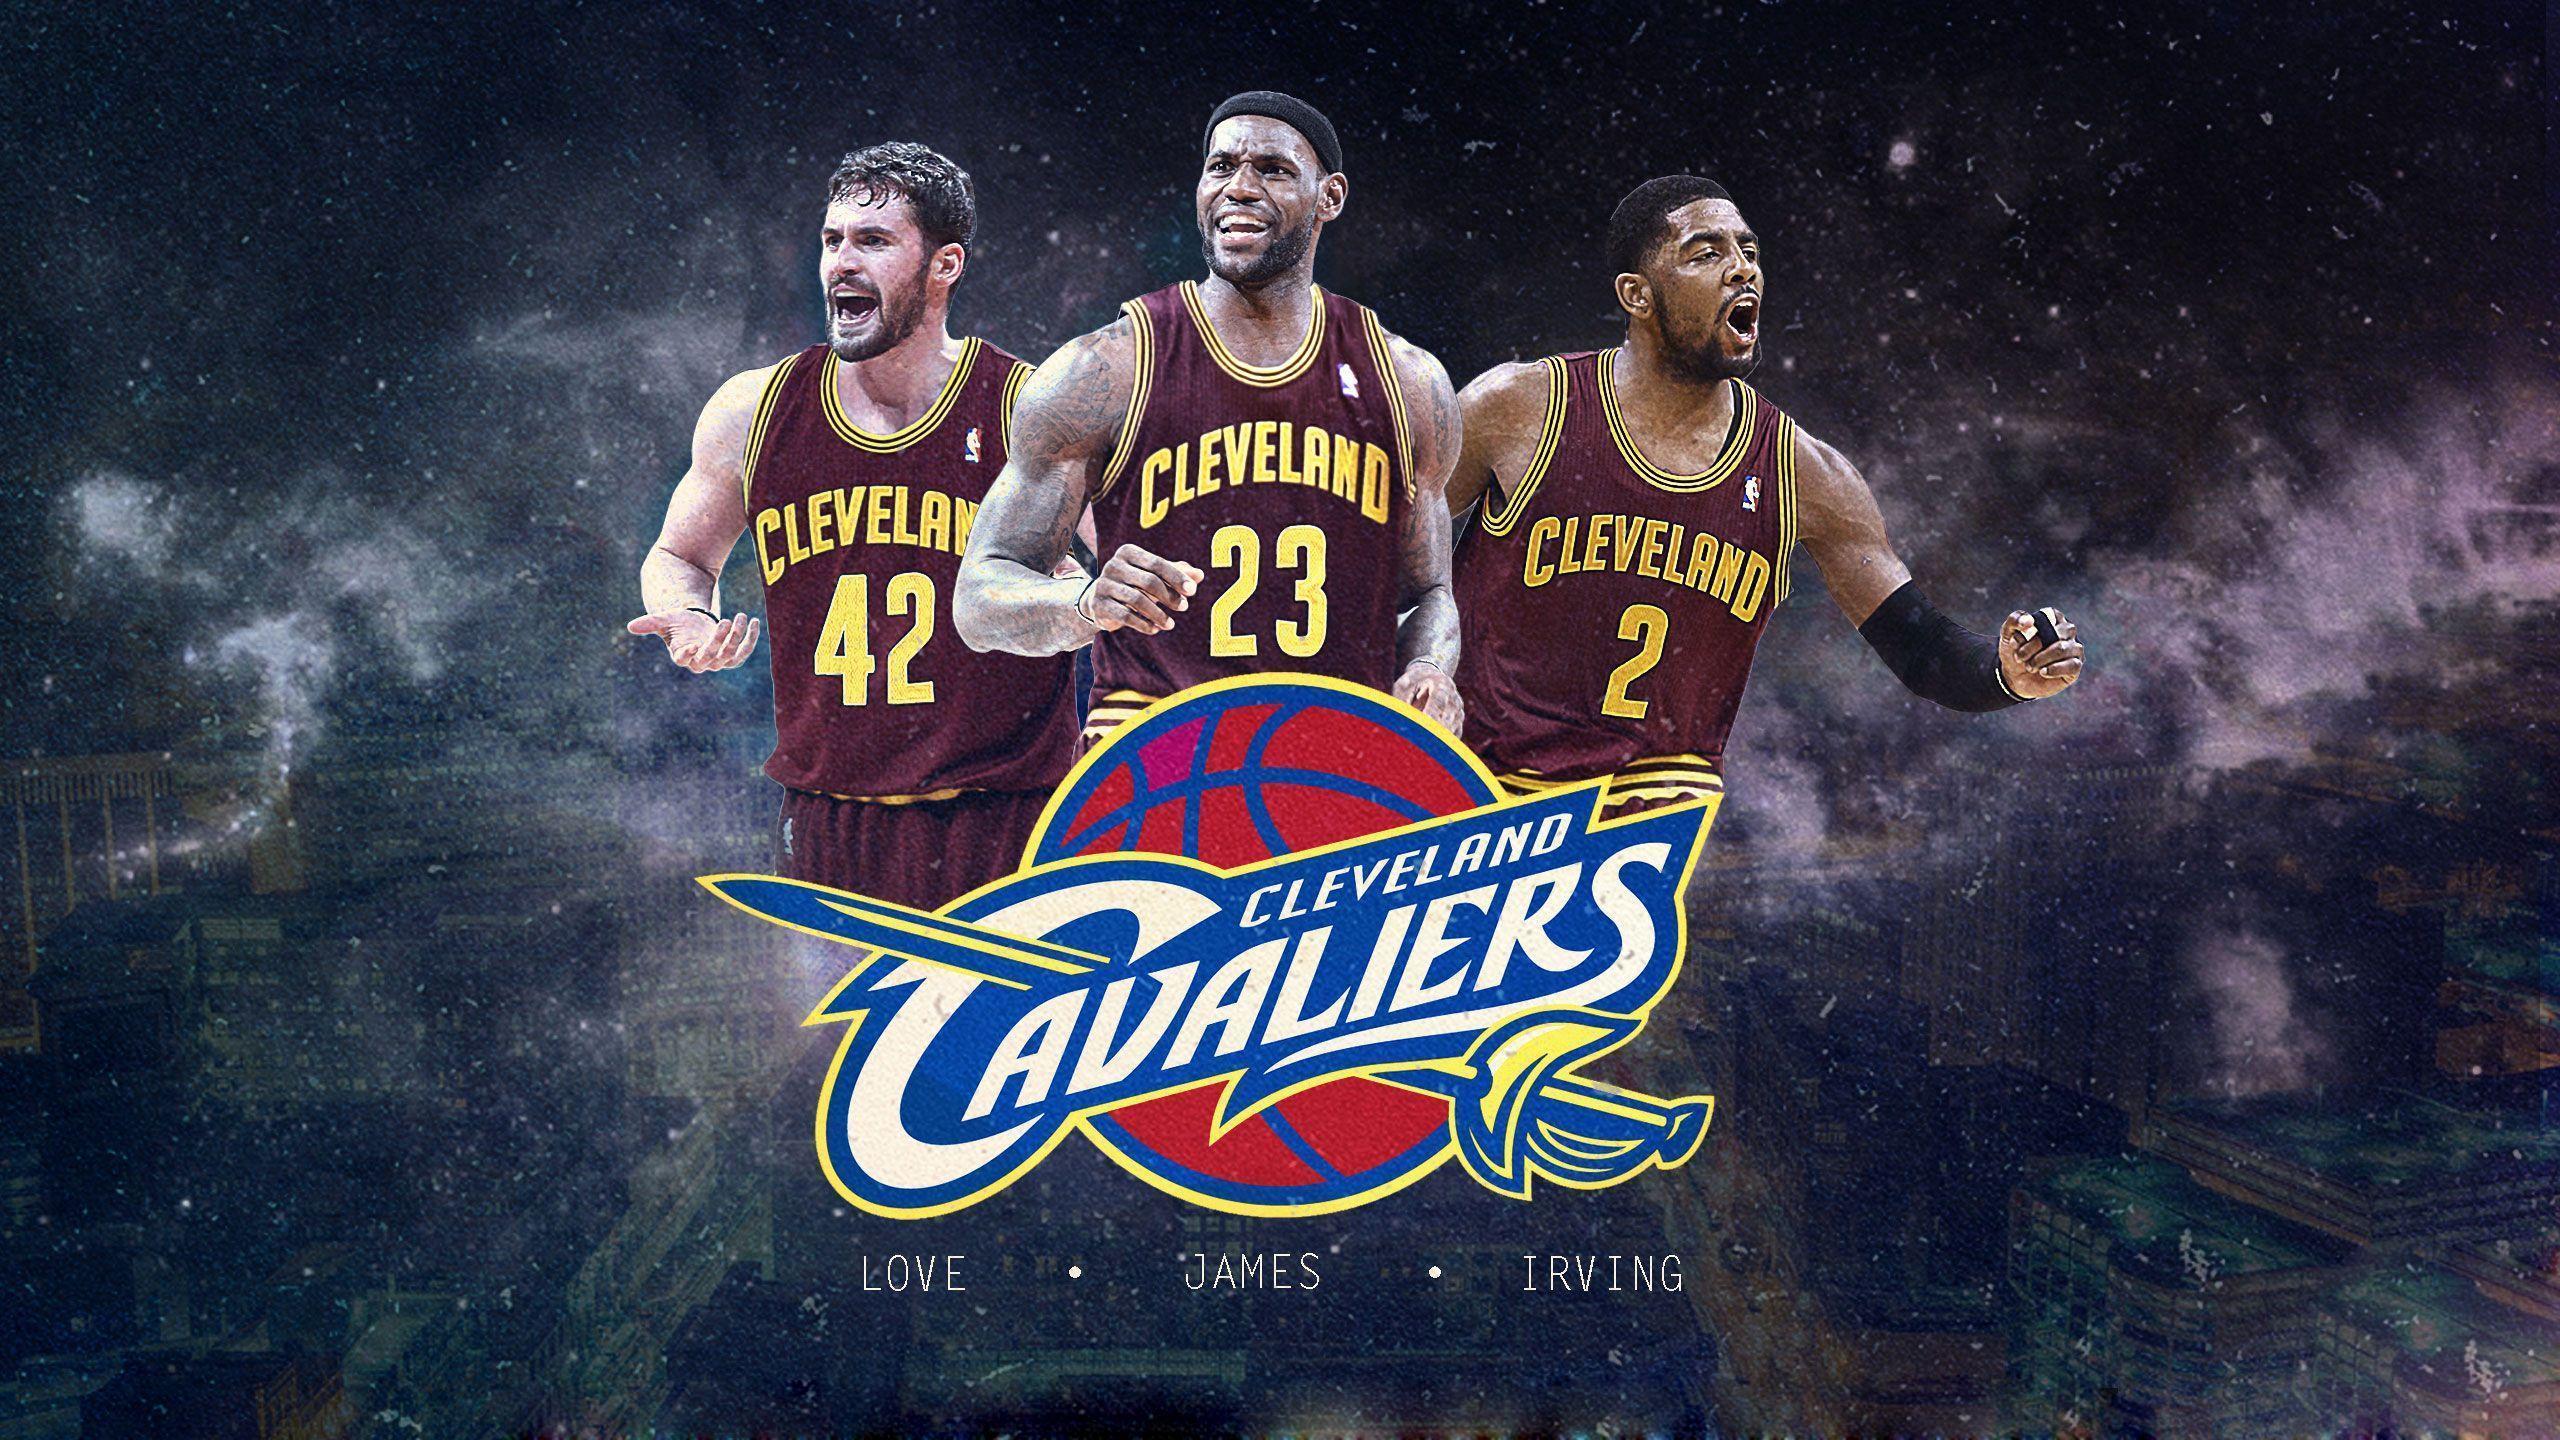 Cleveland Cavaliers Wallpaper HD. Wallpaper, Background